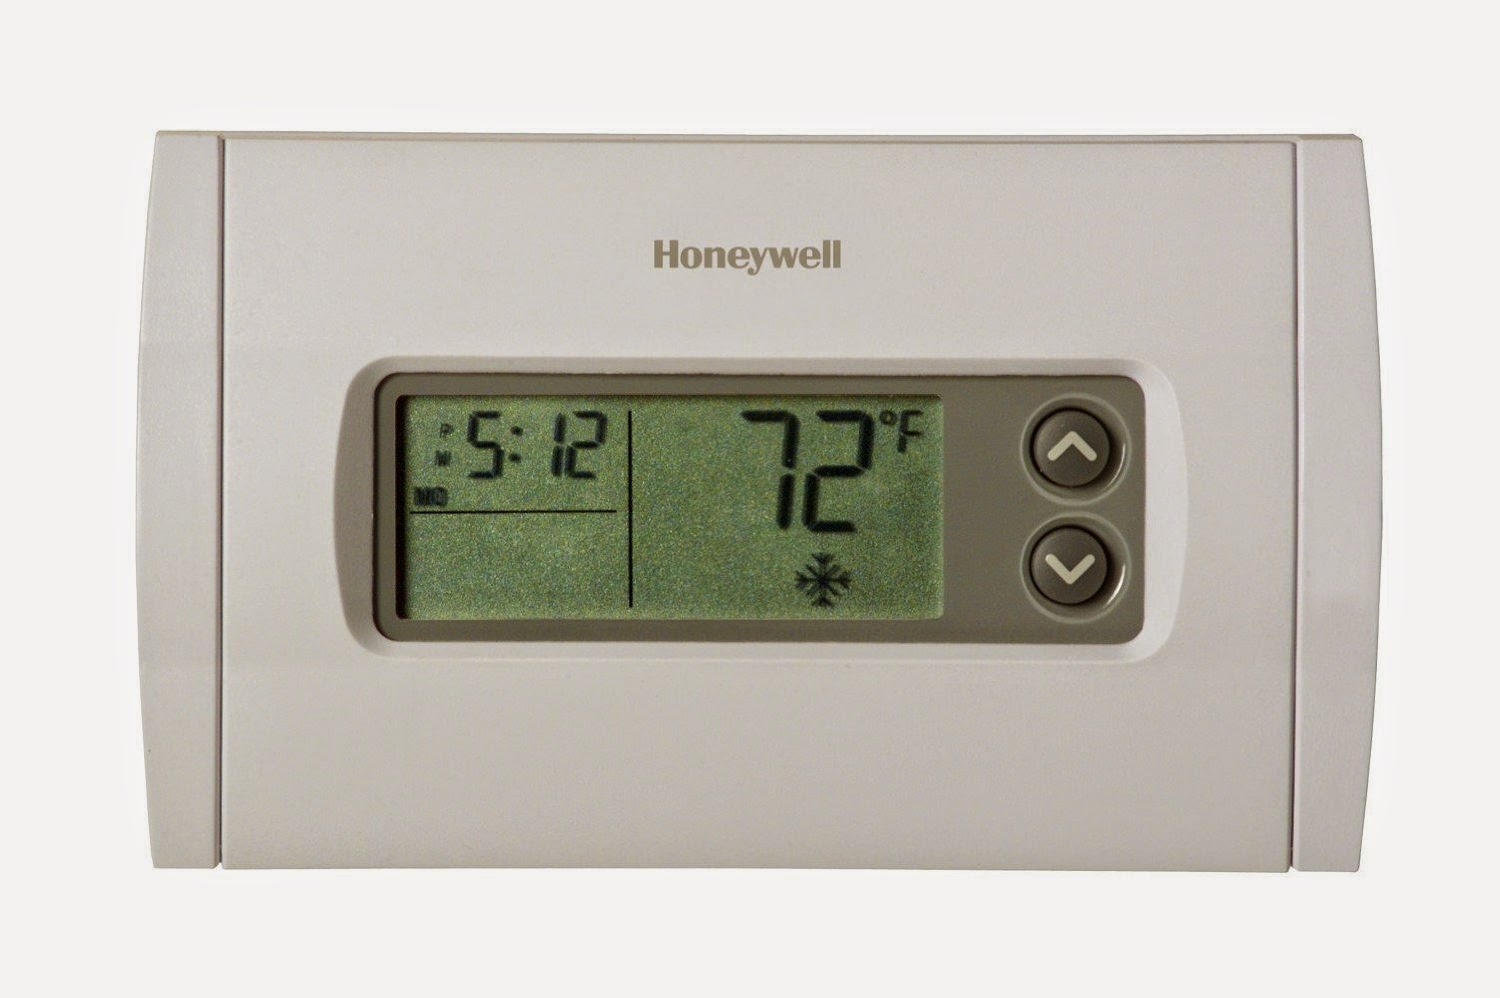 Honeywell Thermostat Manual Rth 230B - companieskey